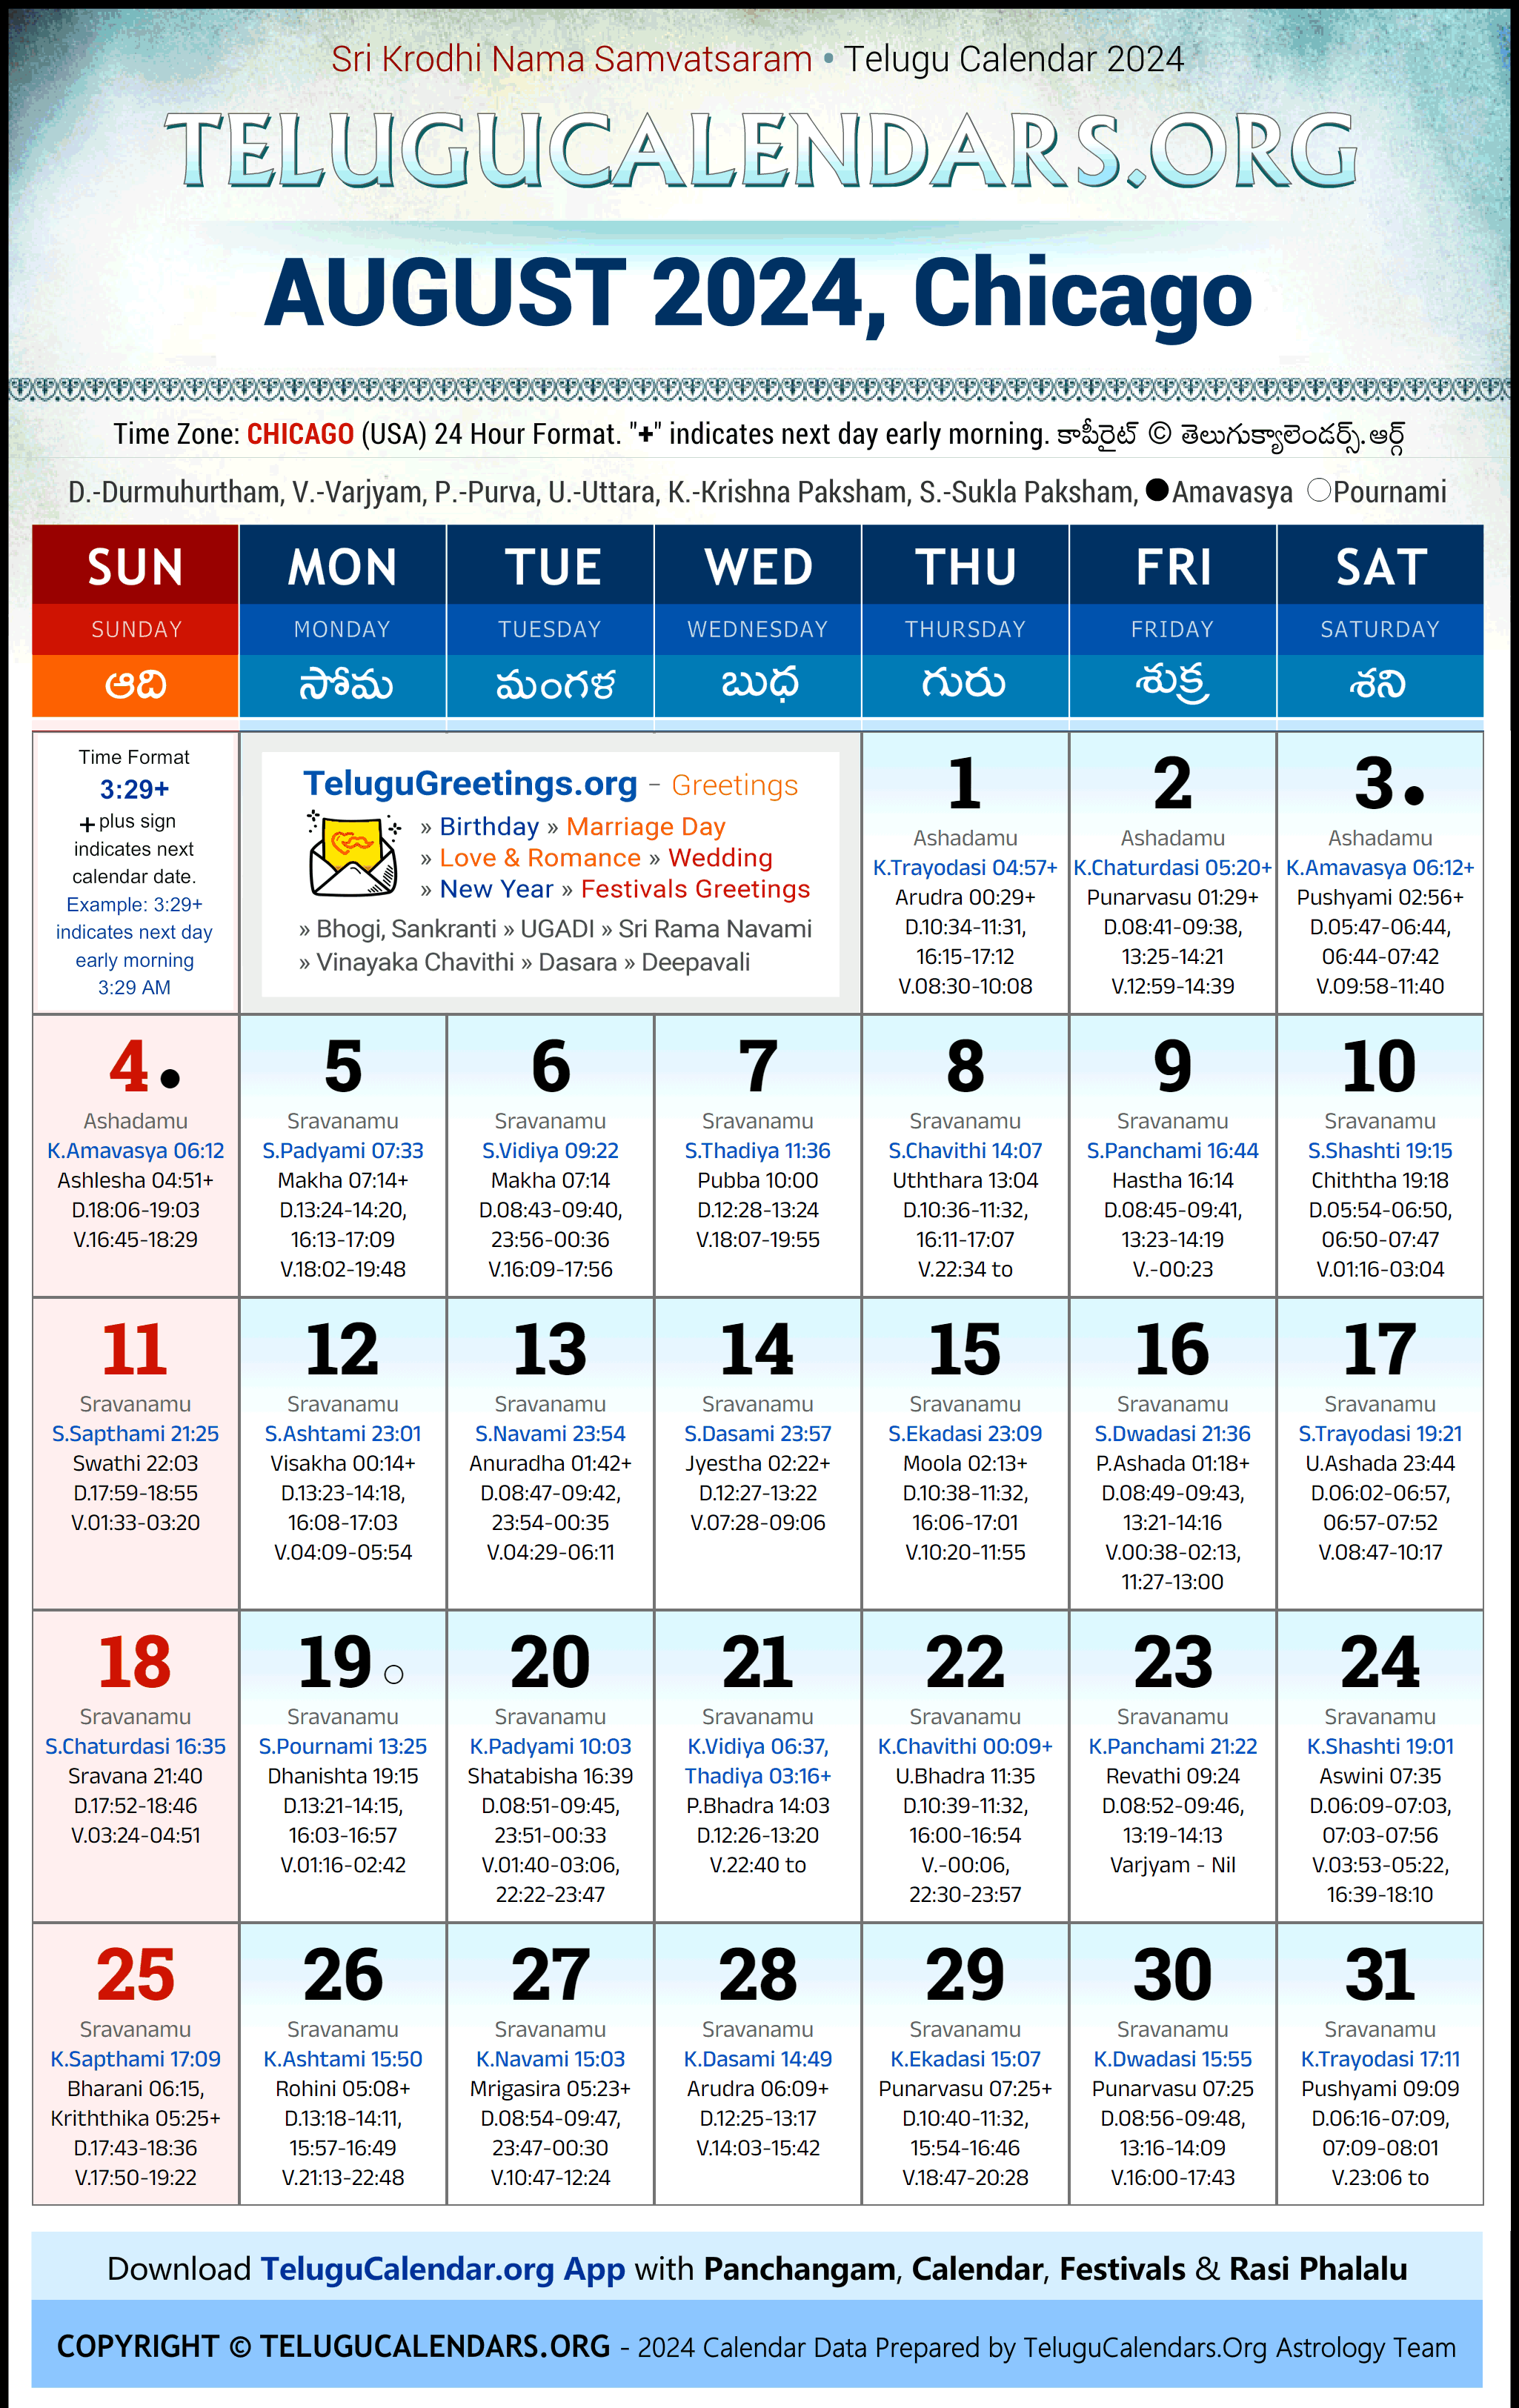 Telugu Calendar 2024 August Festivals for Chicago